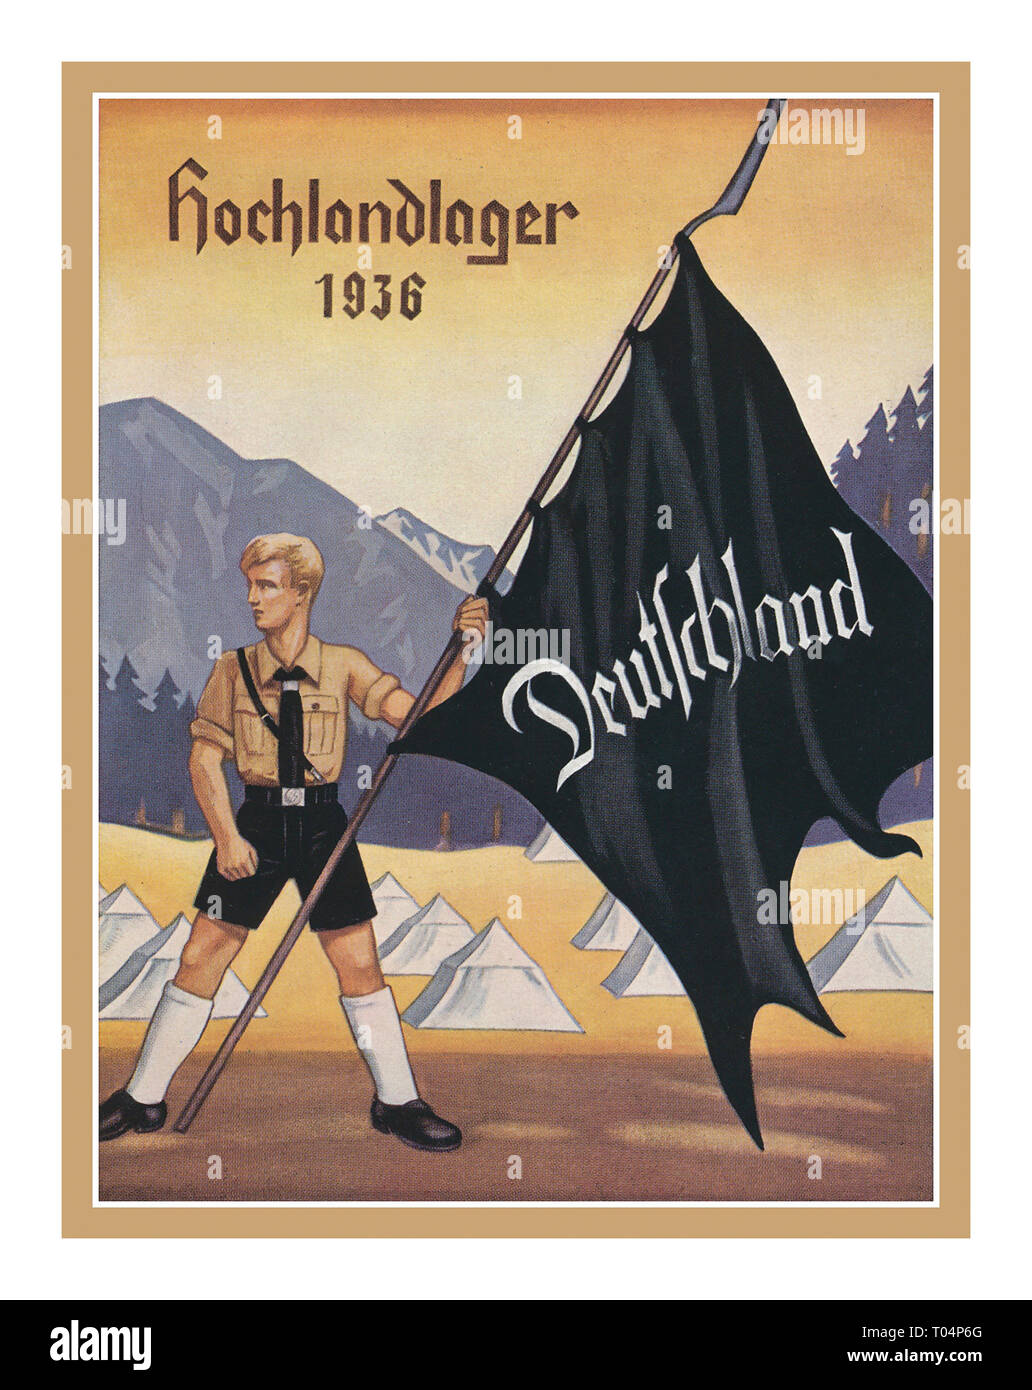 Ansichtskarten : Propagande : 1936, 'Hochlandlager 1936', farbige Propagandakarte, gelaufen mit Texte. 1936, 'Hochlandlager 1936', farbige Propagandakarte, gelaufen mit Texte. Banque D'Images